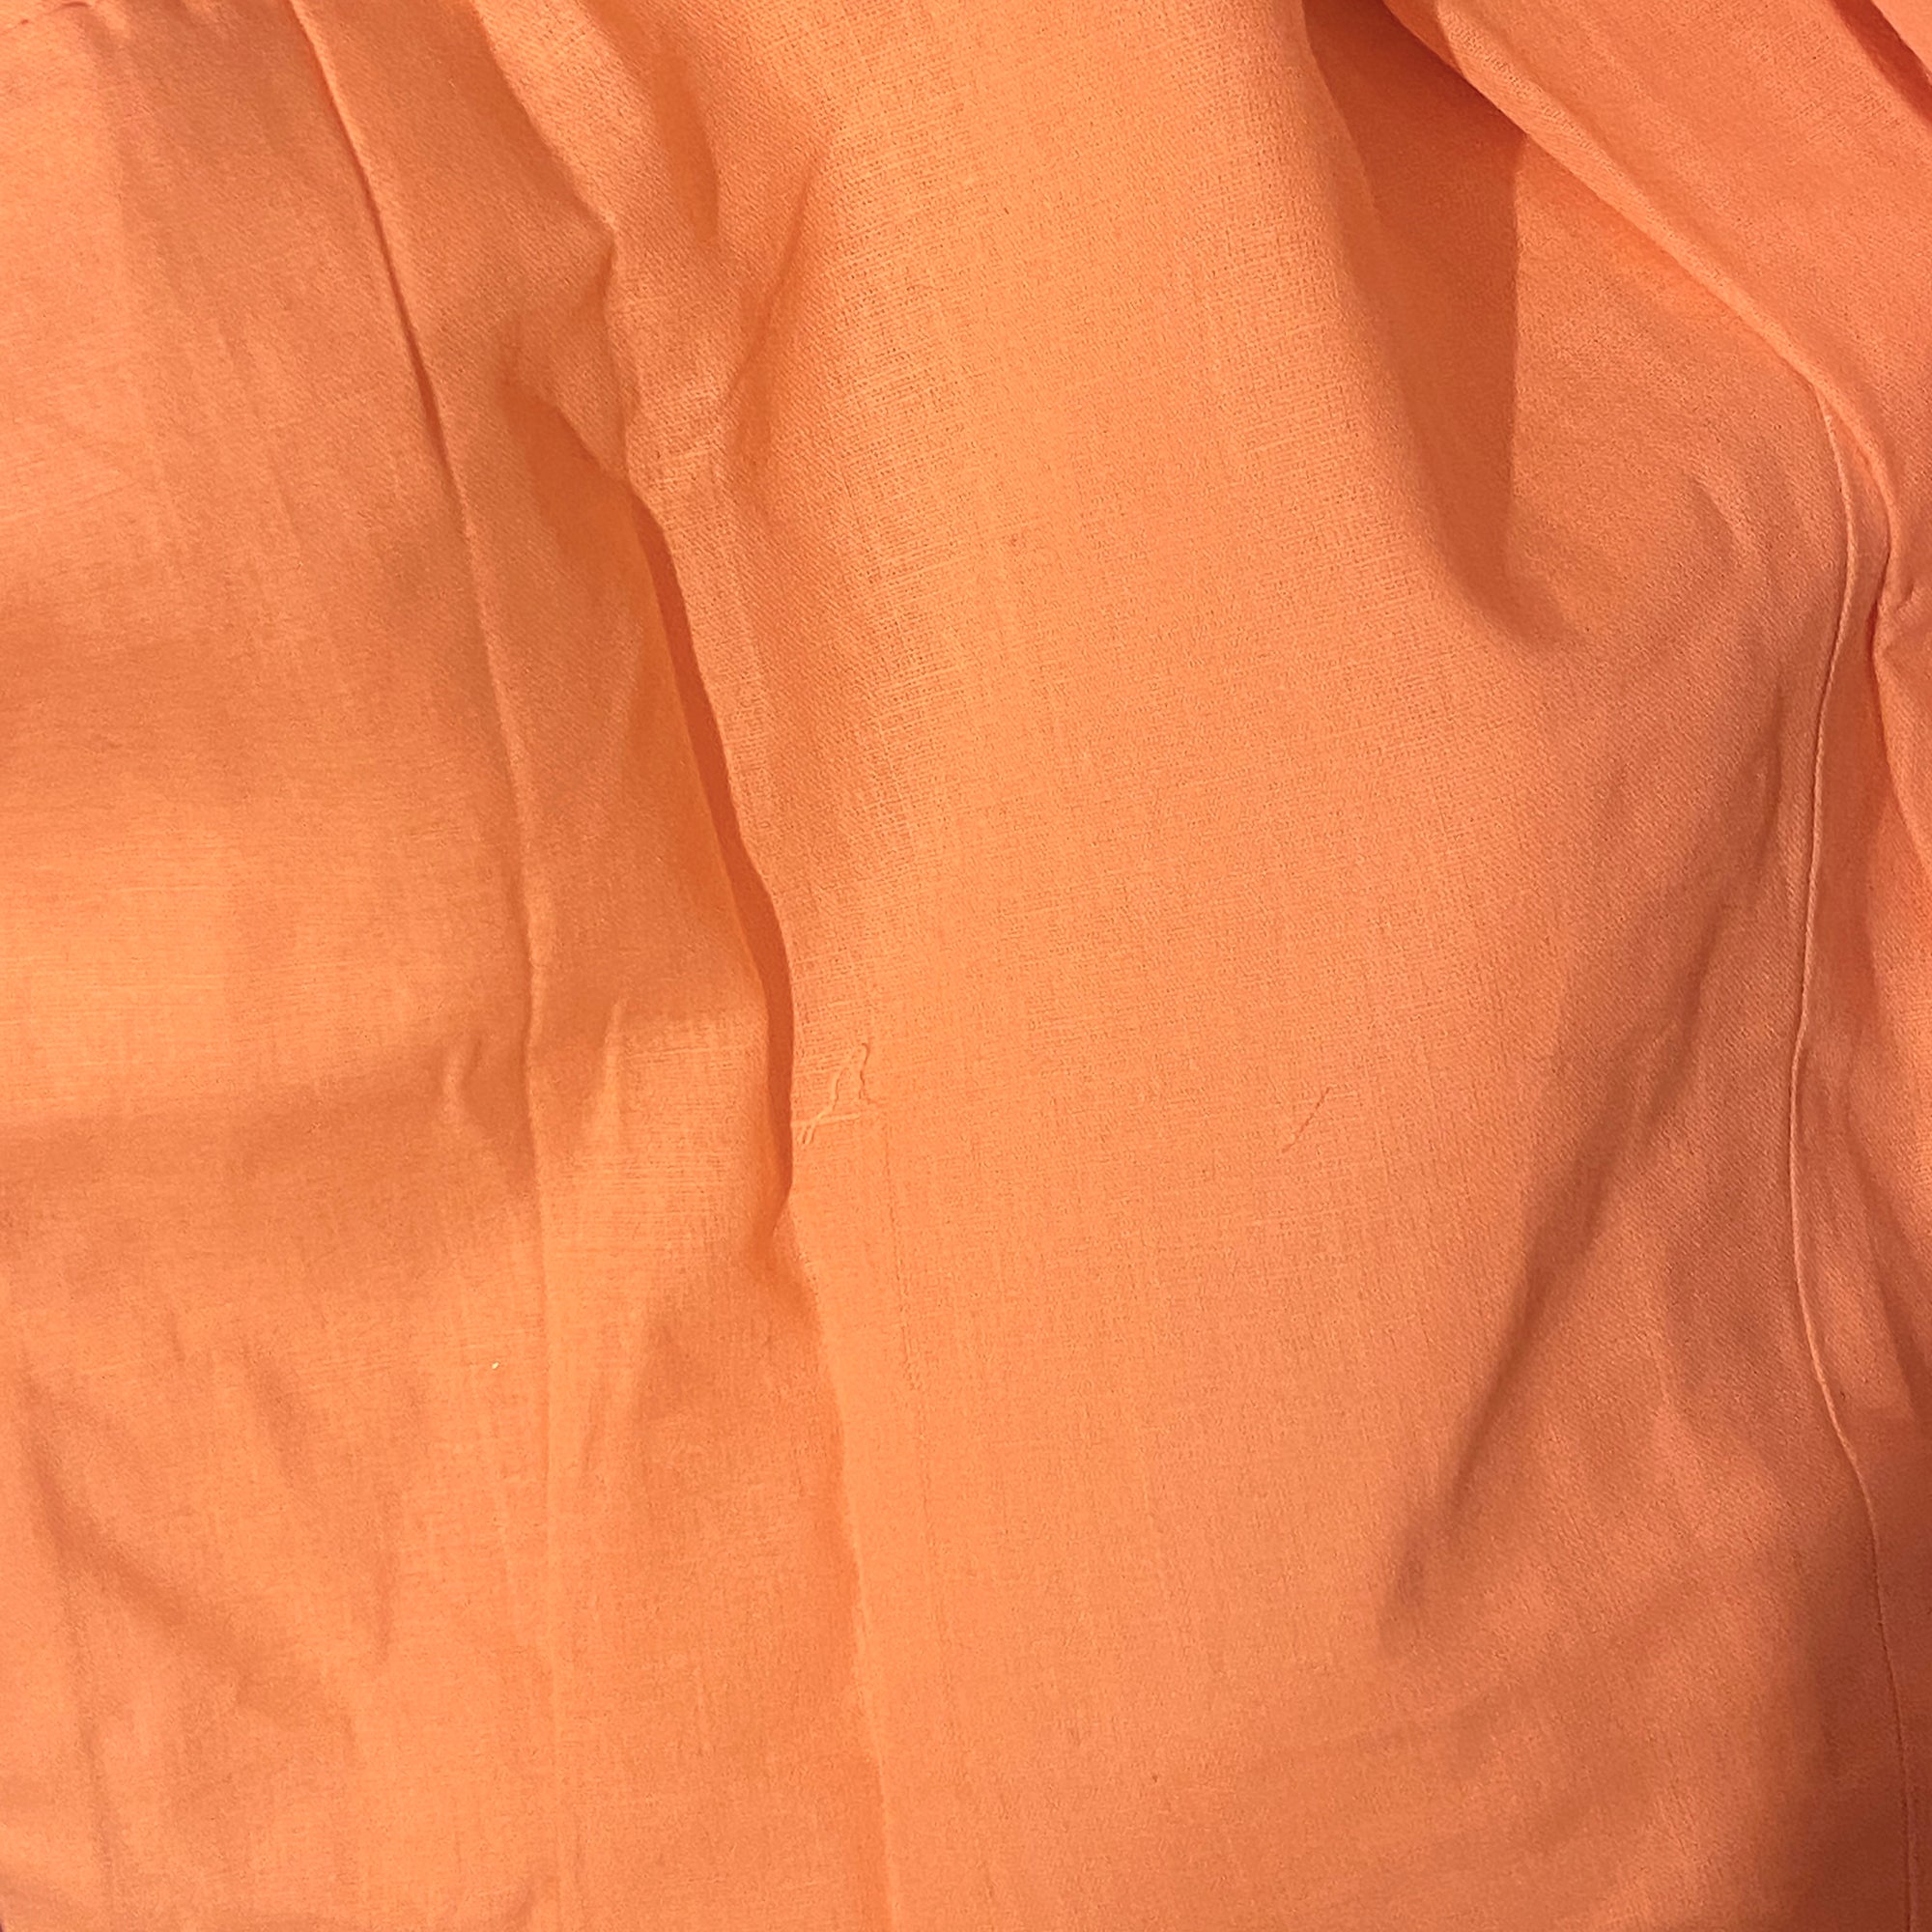 Soft Saree Petticoat - 24 Colors - Vintage India NYC